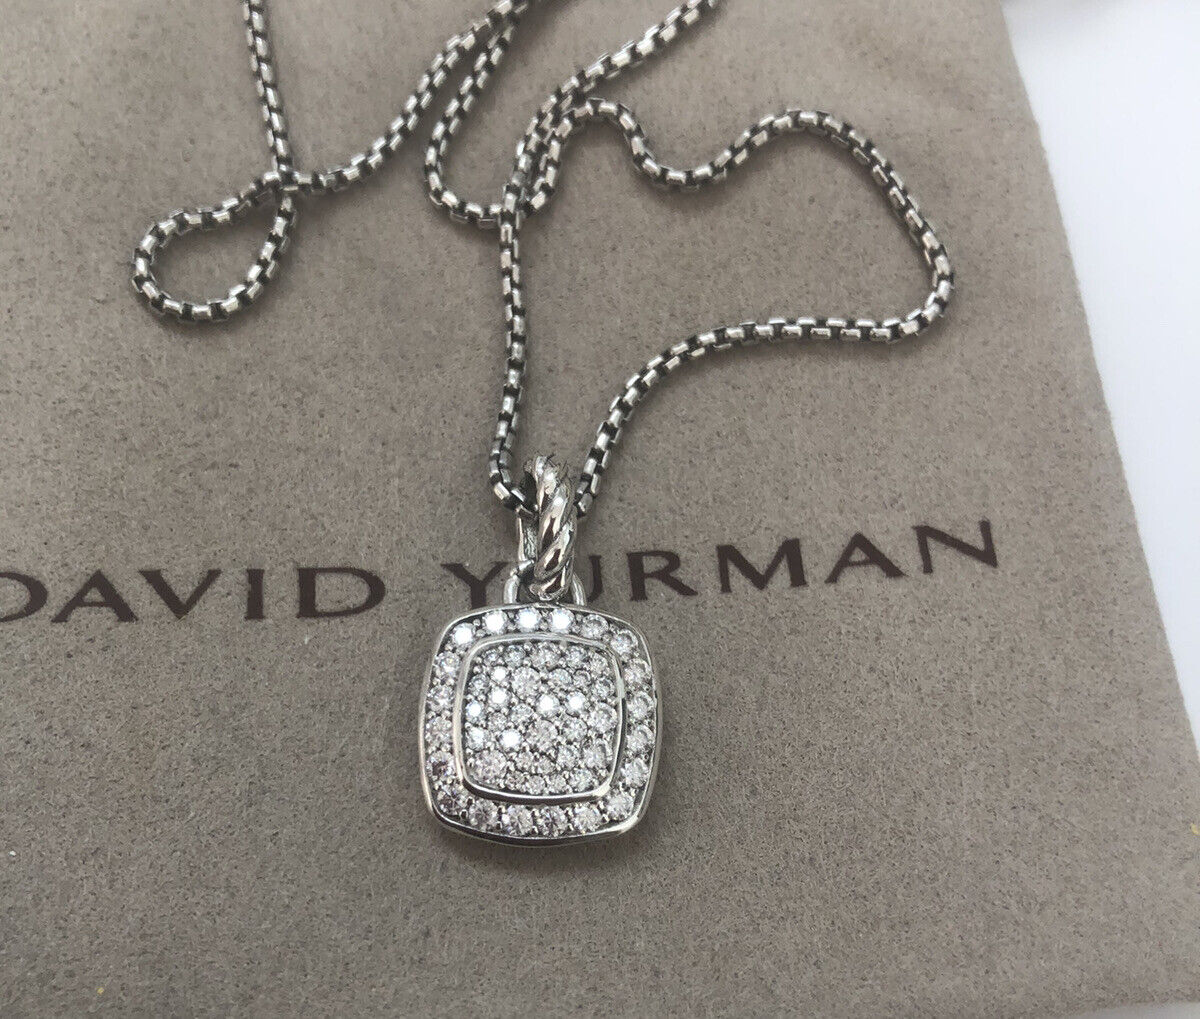 David Yurman Sterling Silver Pave Diamond Petite Albion Pendant Necklace 18